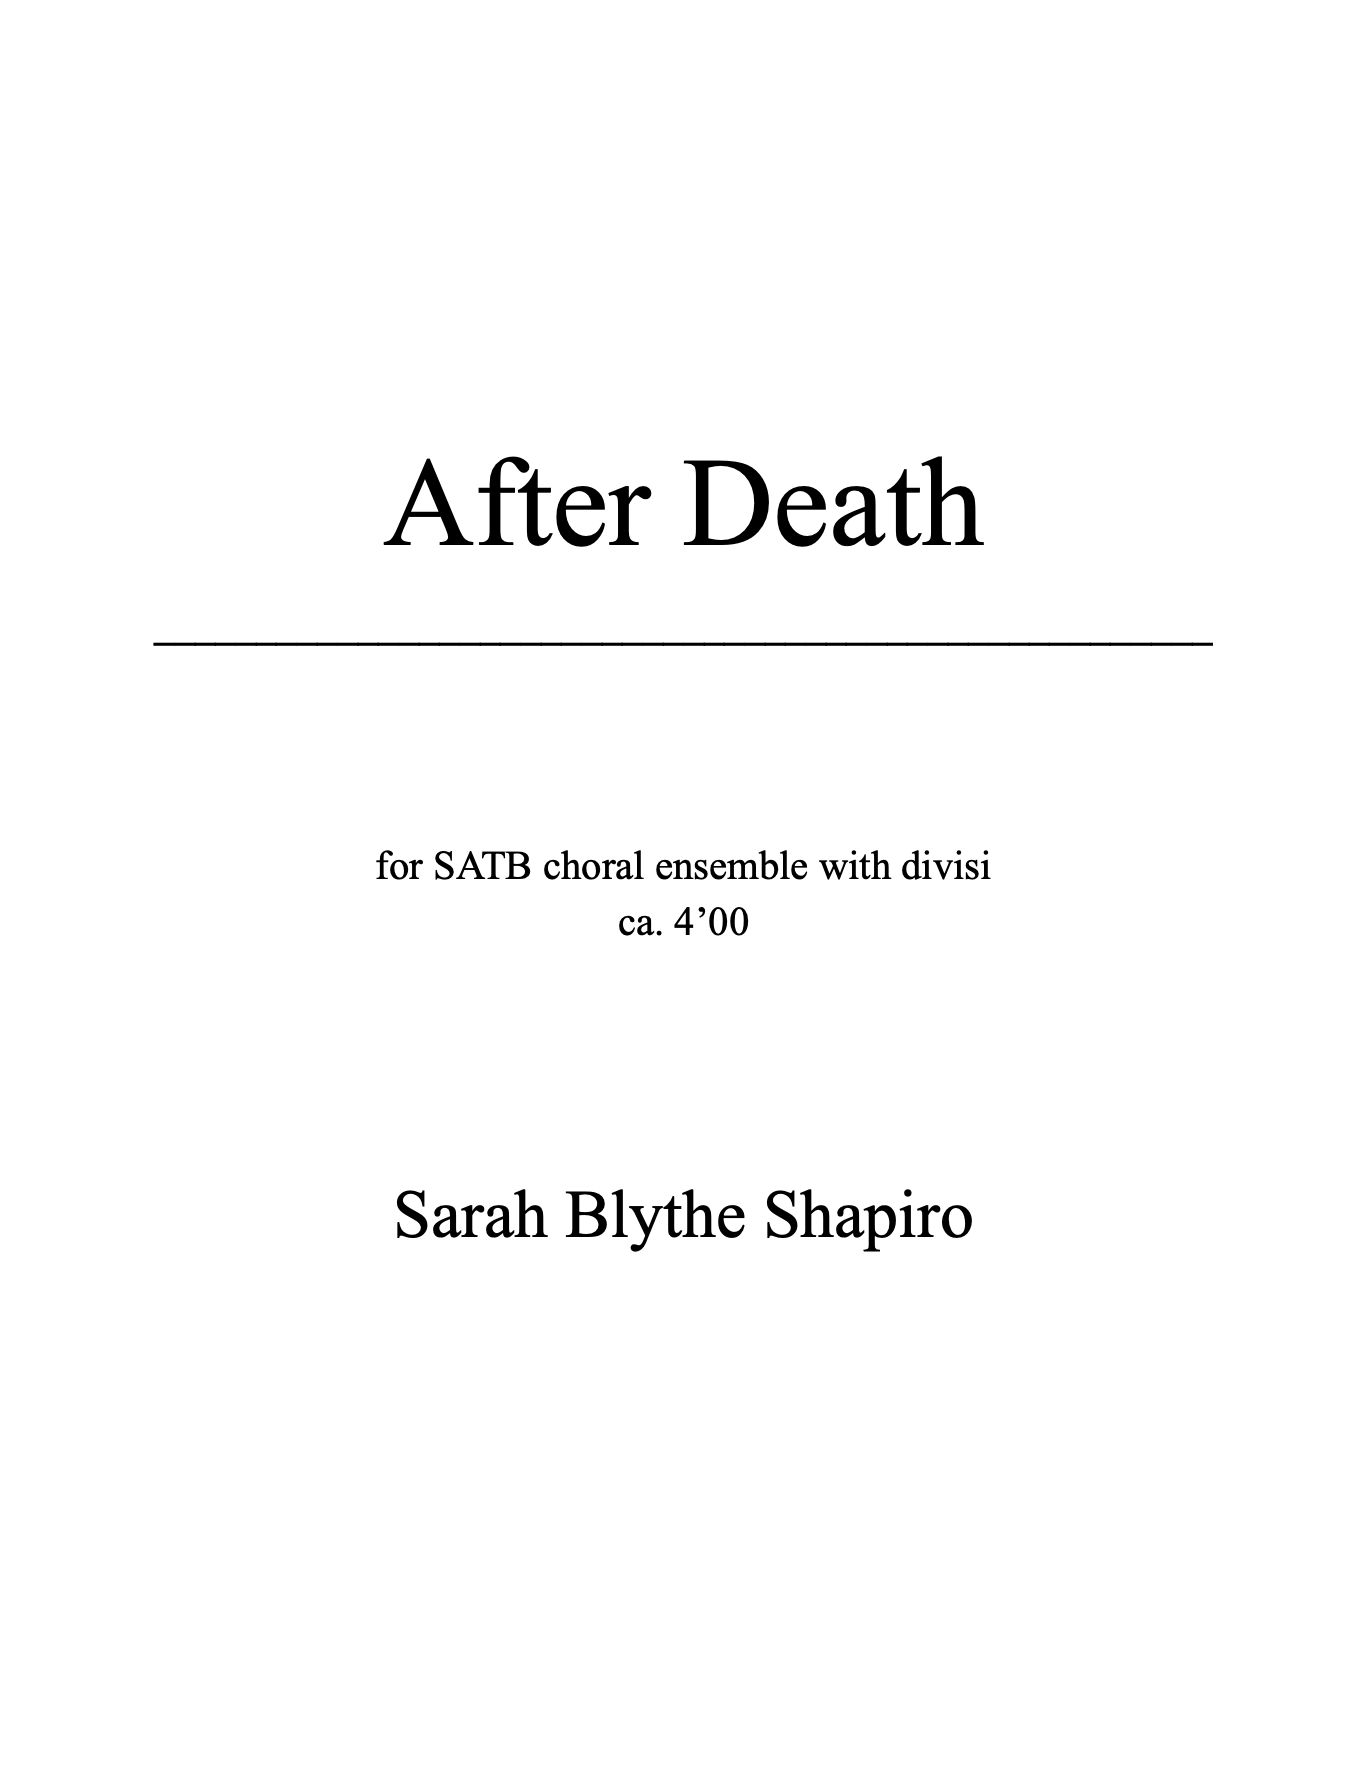 After Death by Sarah Blythe Shapiro 